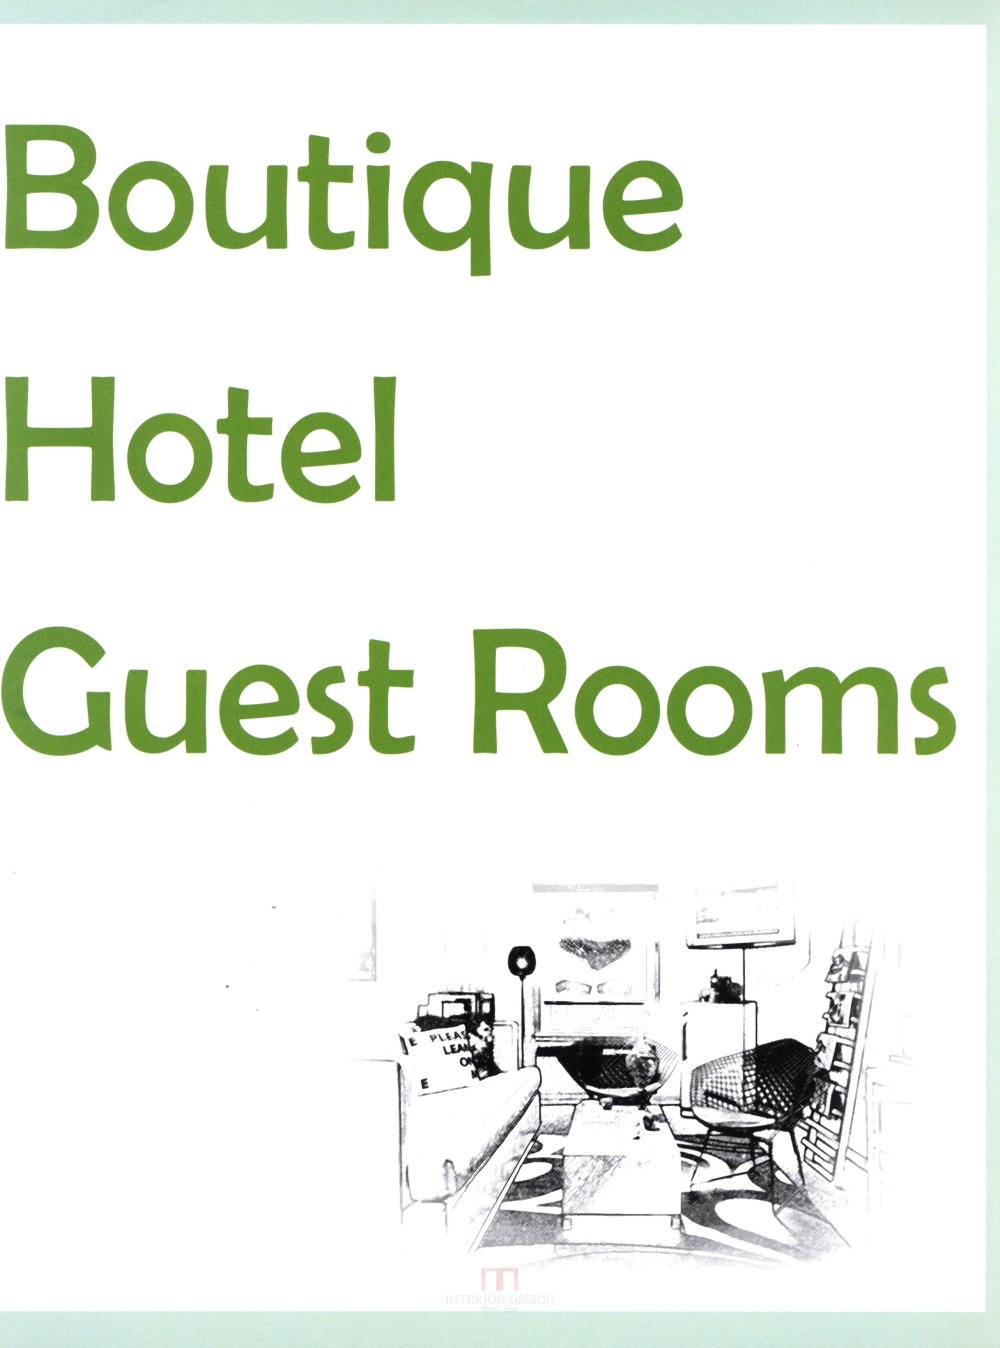 101全球酒店客房 101HOTELS GUEST ROOMS_图站_AiJpgg_com_200.jpg